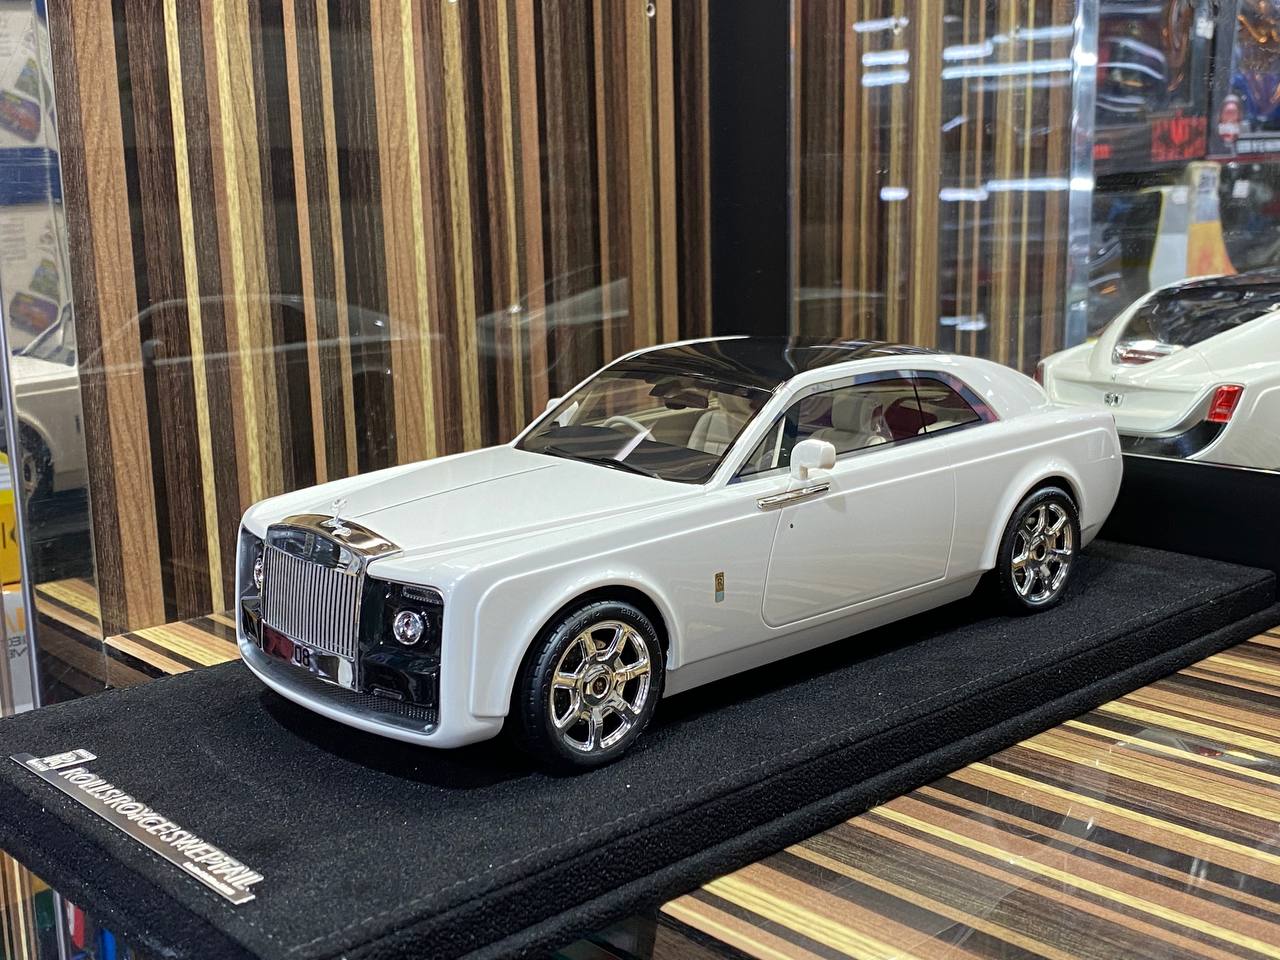 AutoBarn Models Rolls-Royce SWEPTAIL - 1/18 Resin Model, Pearl White|Sold in Dturman.com Dubai UAE.